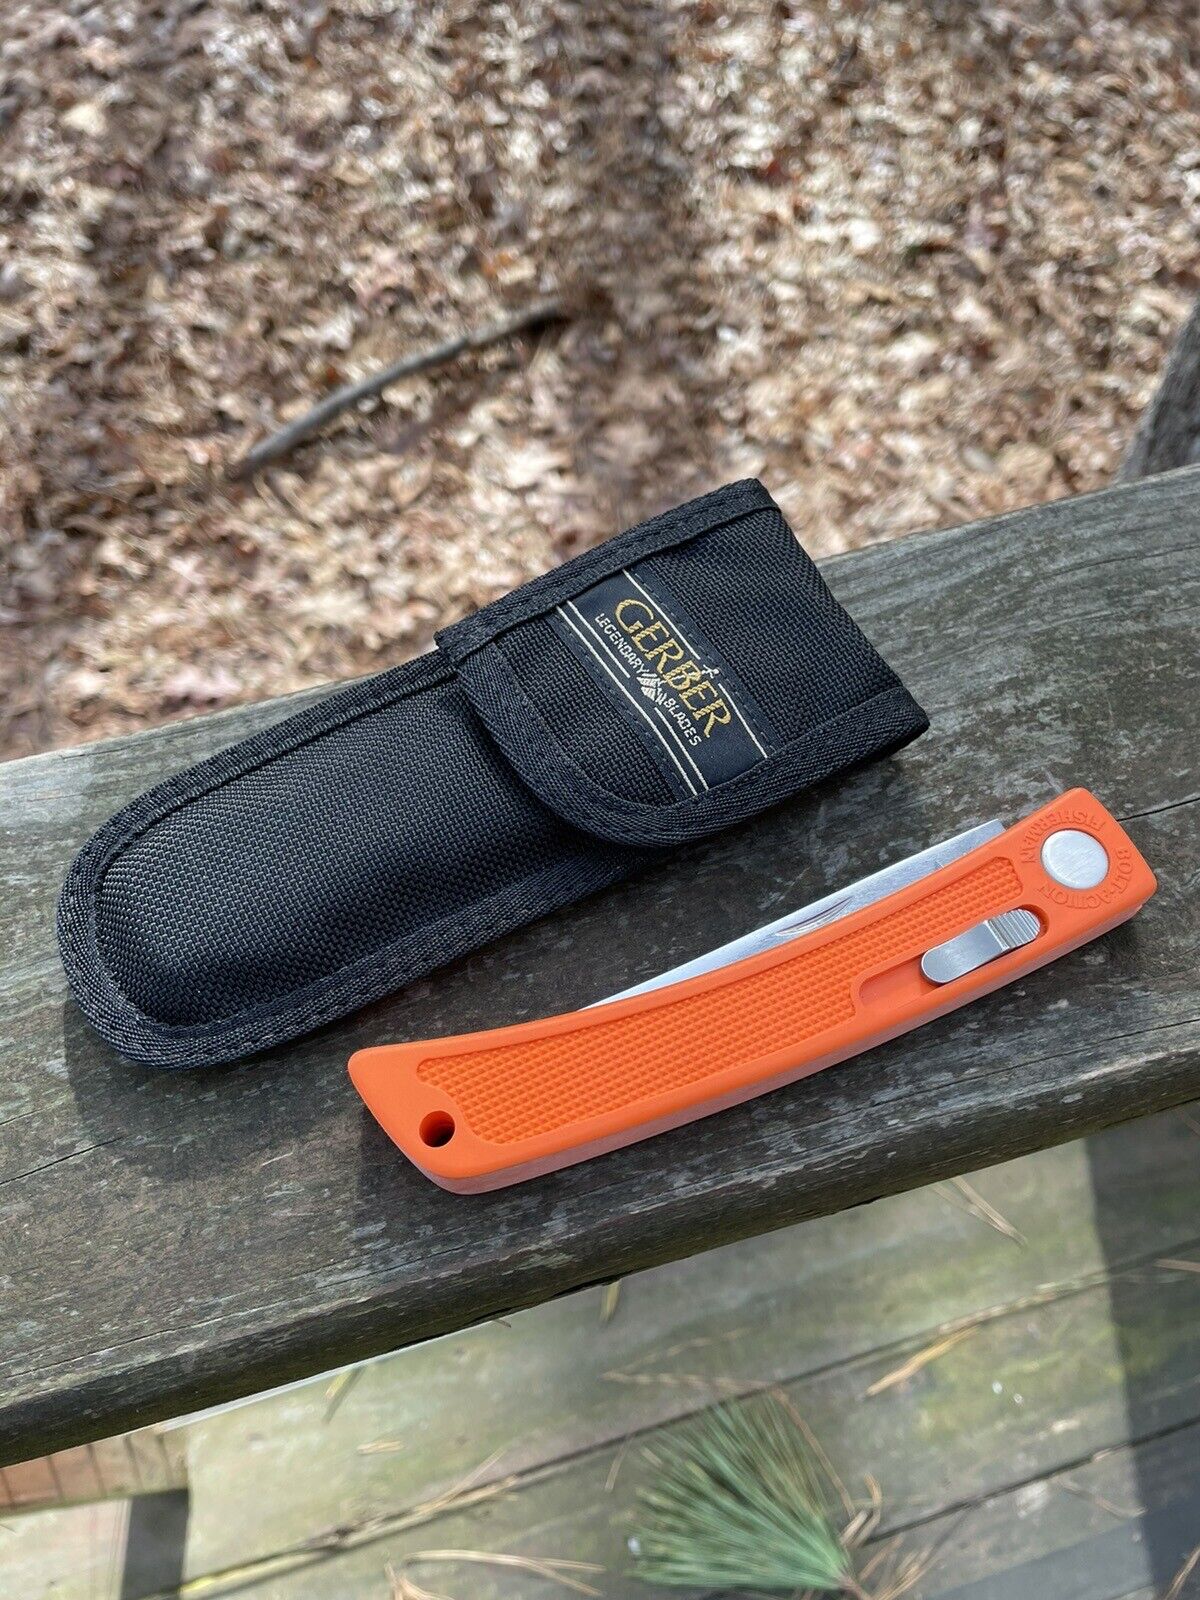 Collectible Rare Gerber Bolt-Action Fisherman Filet Folding Knife USA Orange